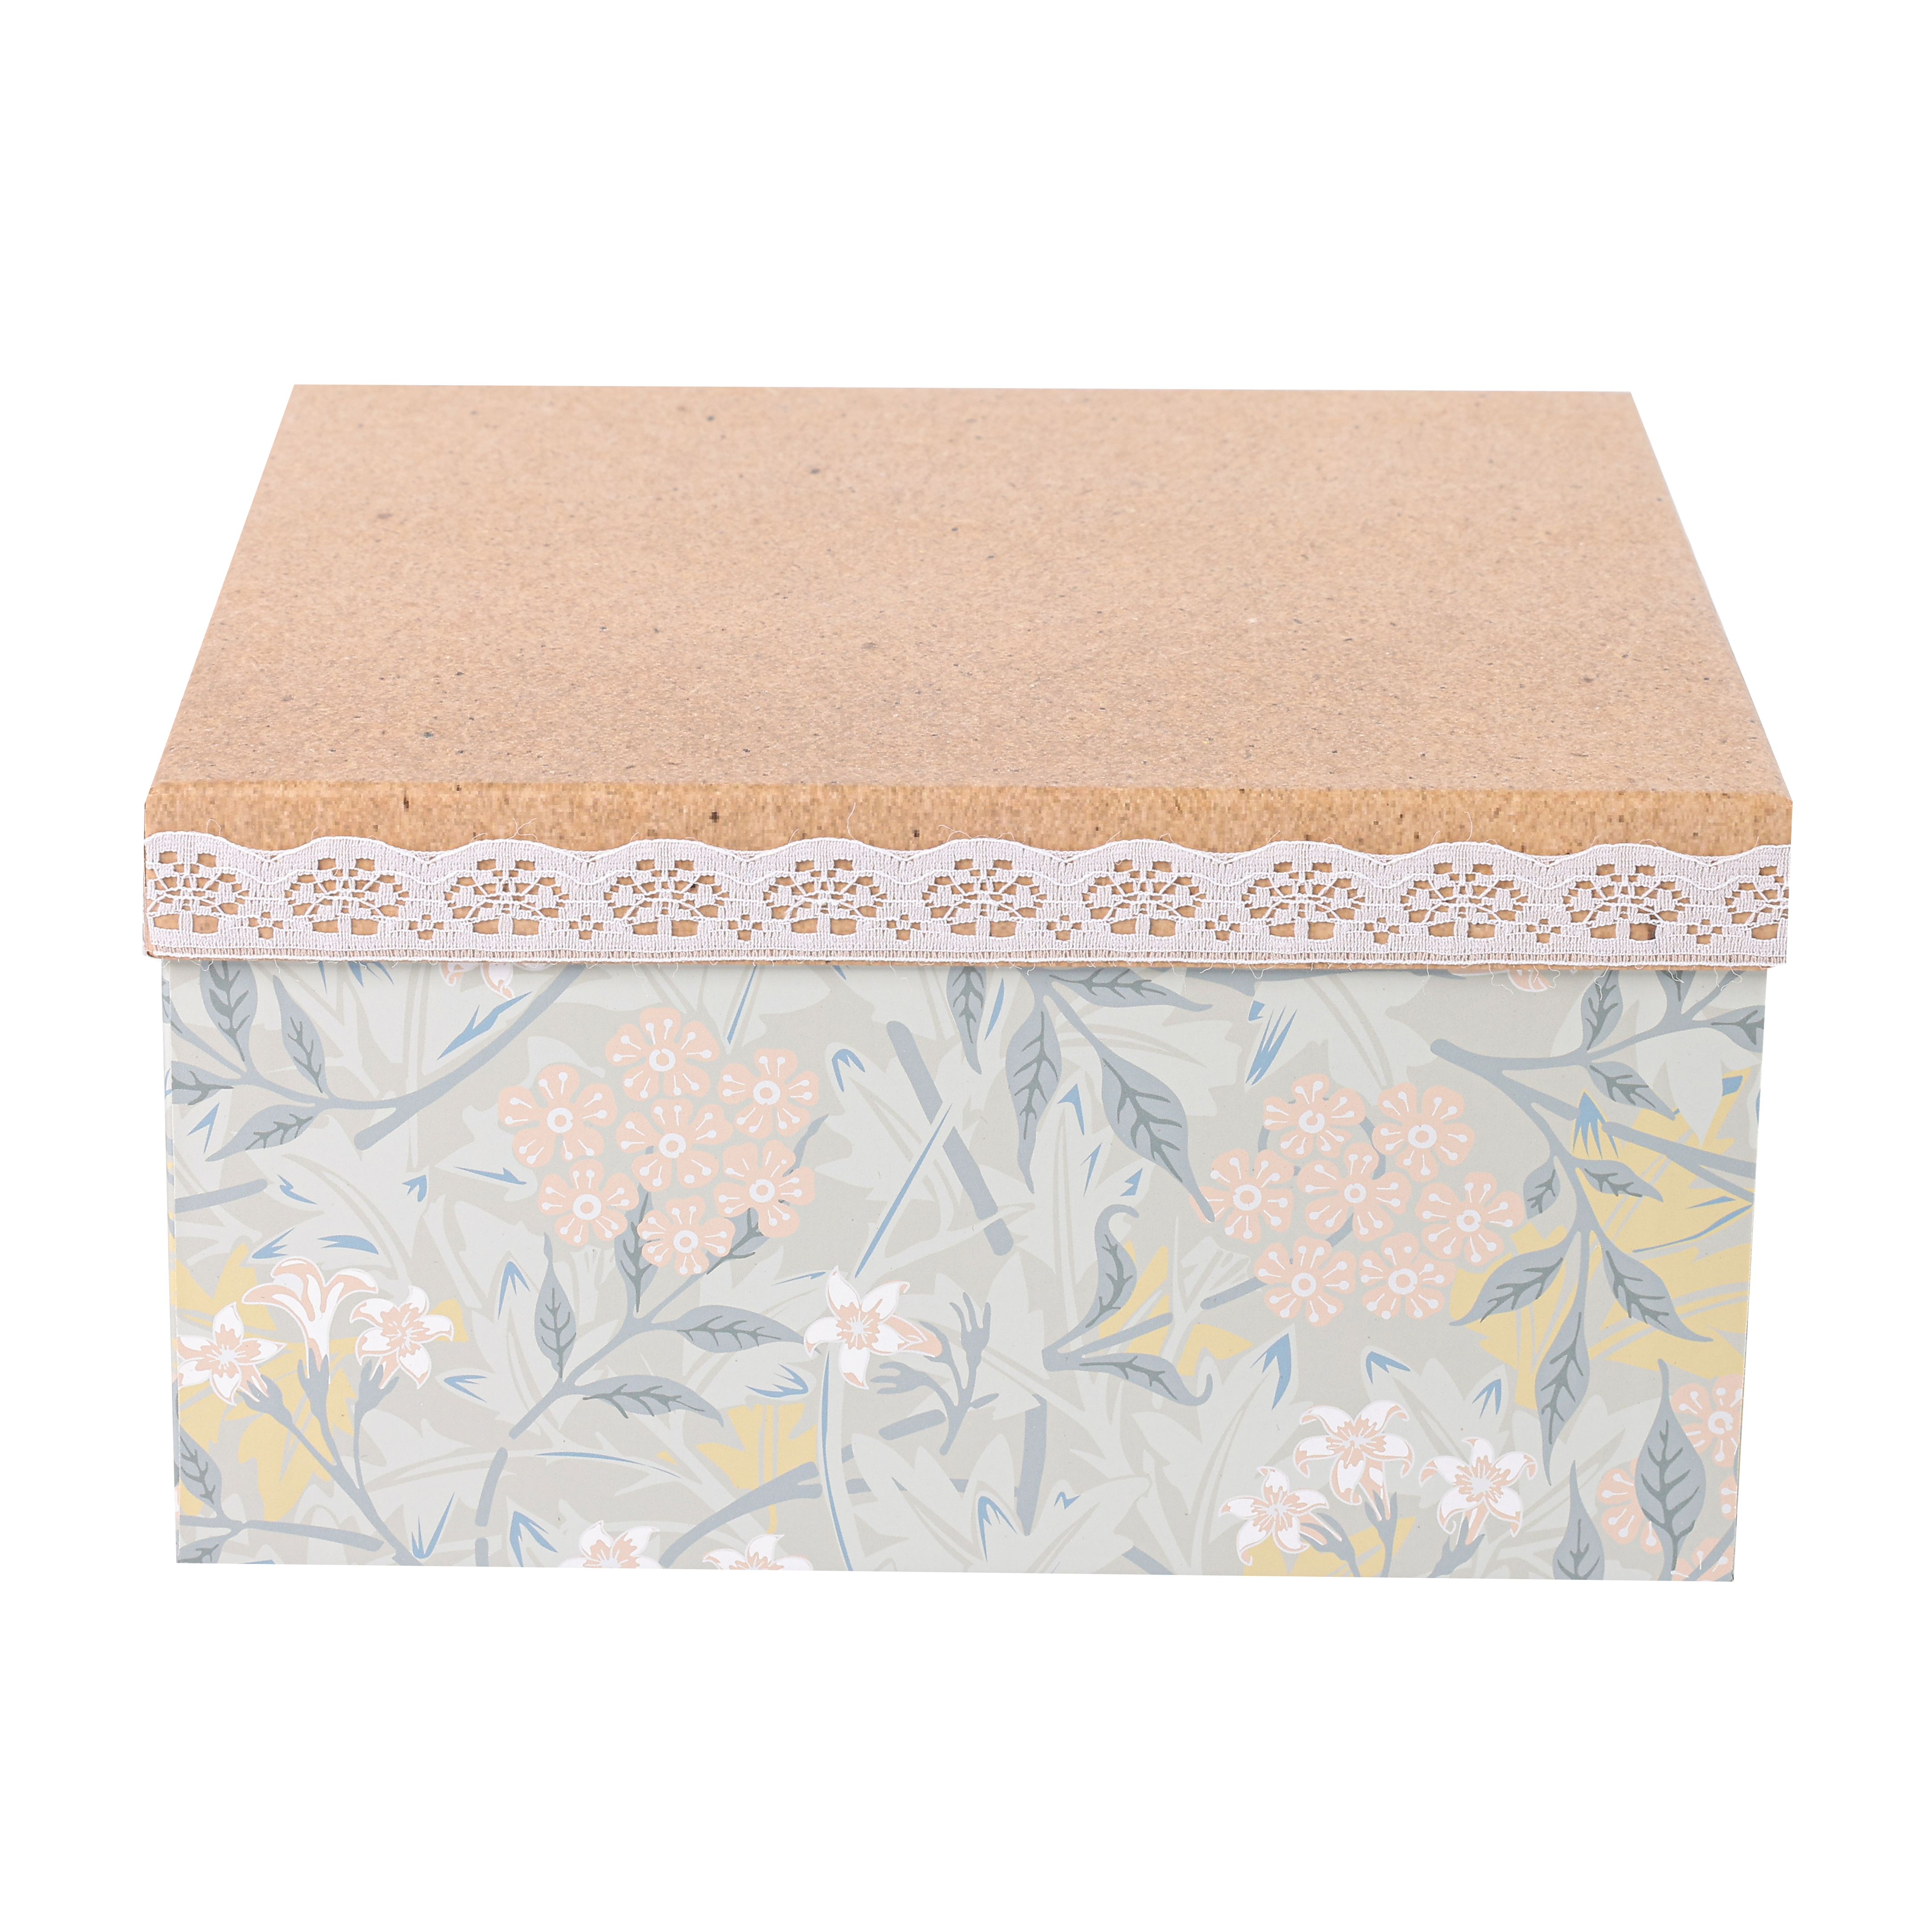 Lace Lid Gift Paper Box Set GB010